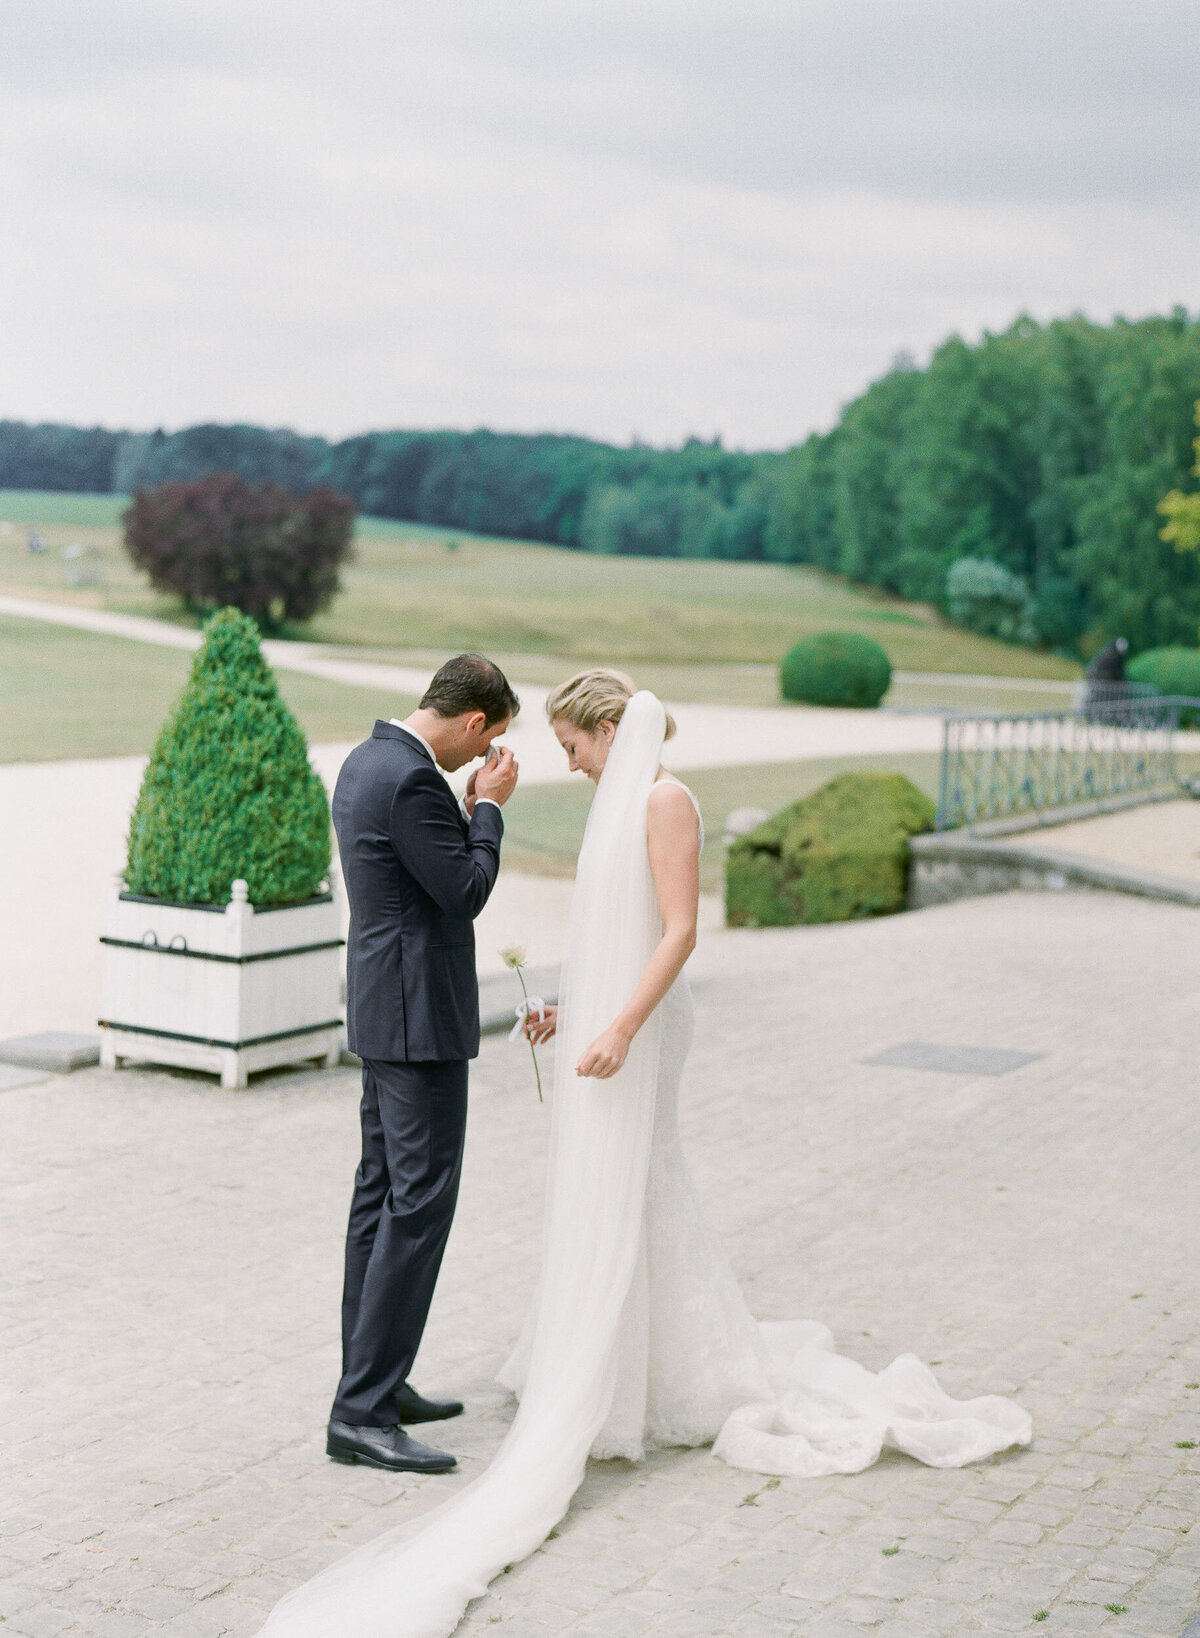 12-Alexandra-Vonk-photography-Chateau-de-la-hulpe-wedding-first-look